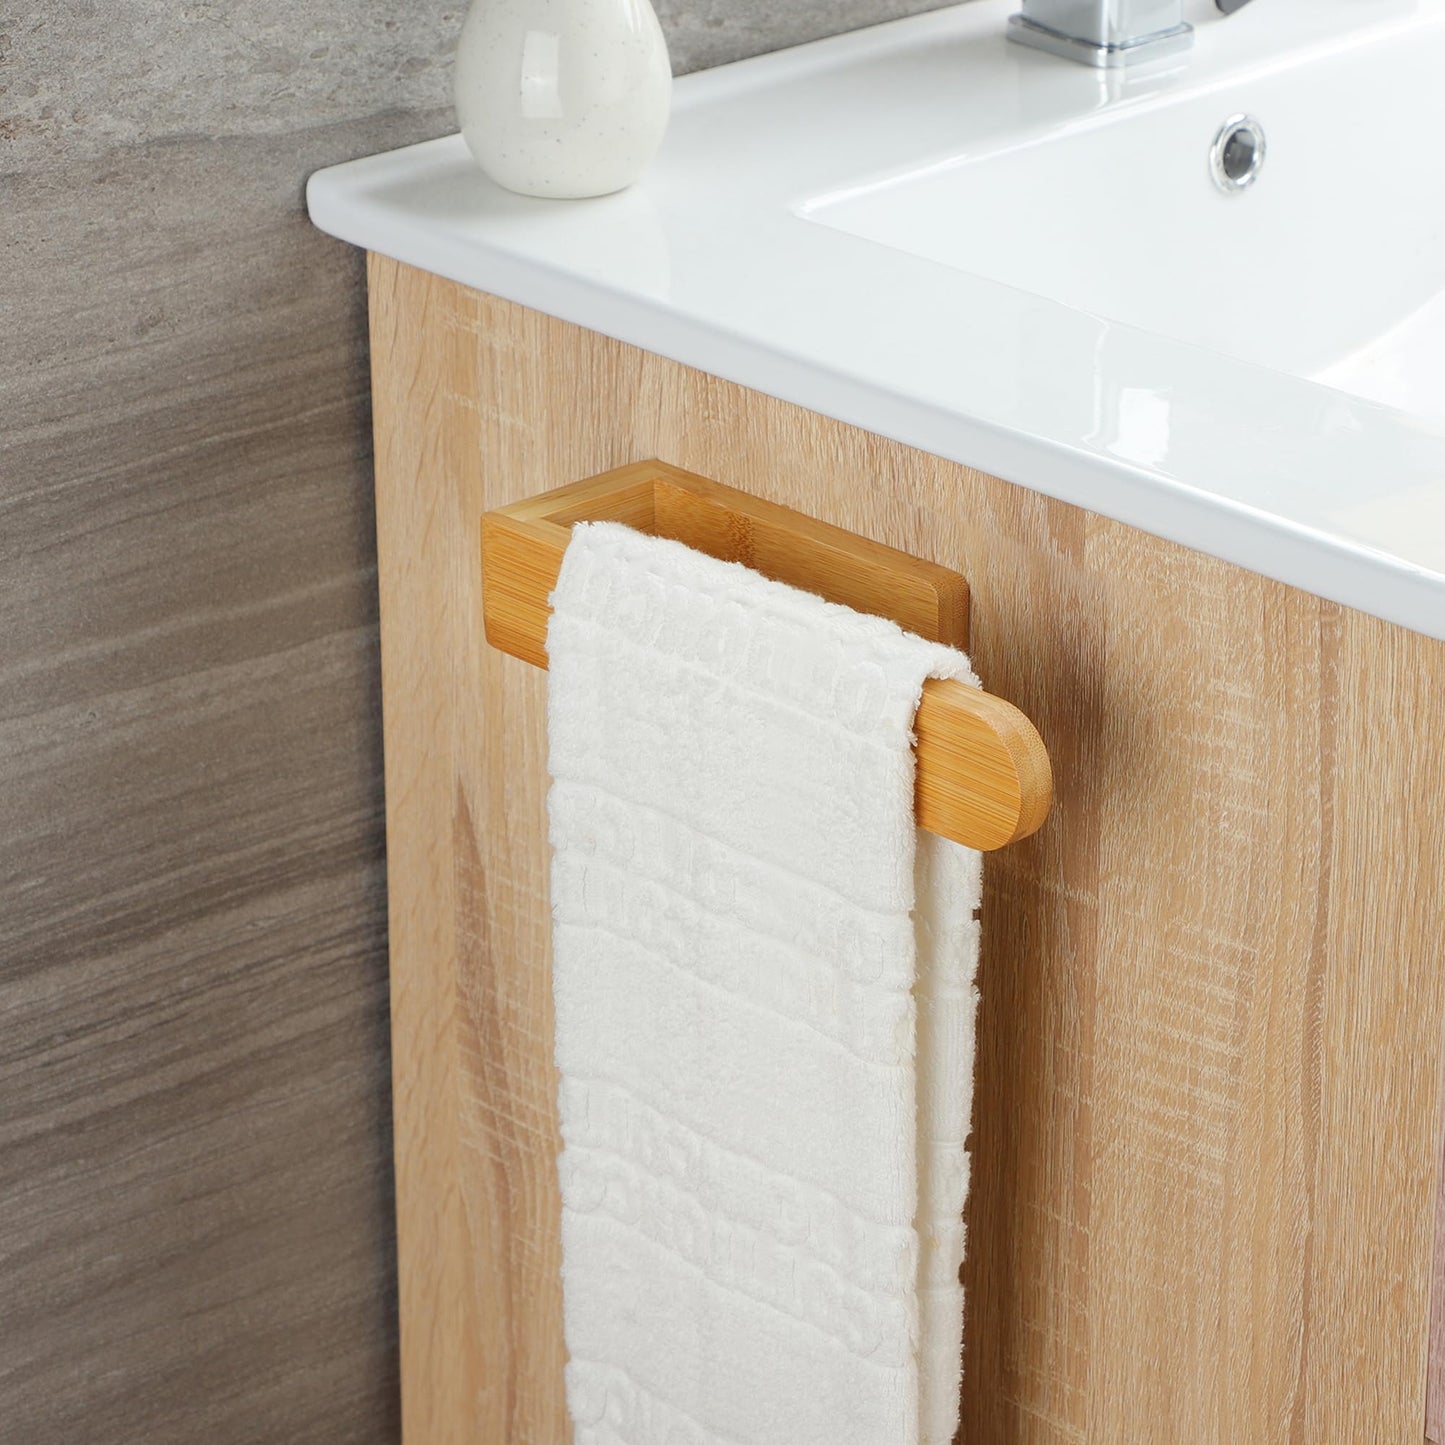 Taozun Towel Holder - Self Adhesive Bamboo Towel Rack, Decorative Natural Wooden Towel Rail for Bathroom, 8 Inch Wall Mounted Towel Bar for Kitchen